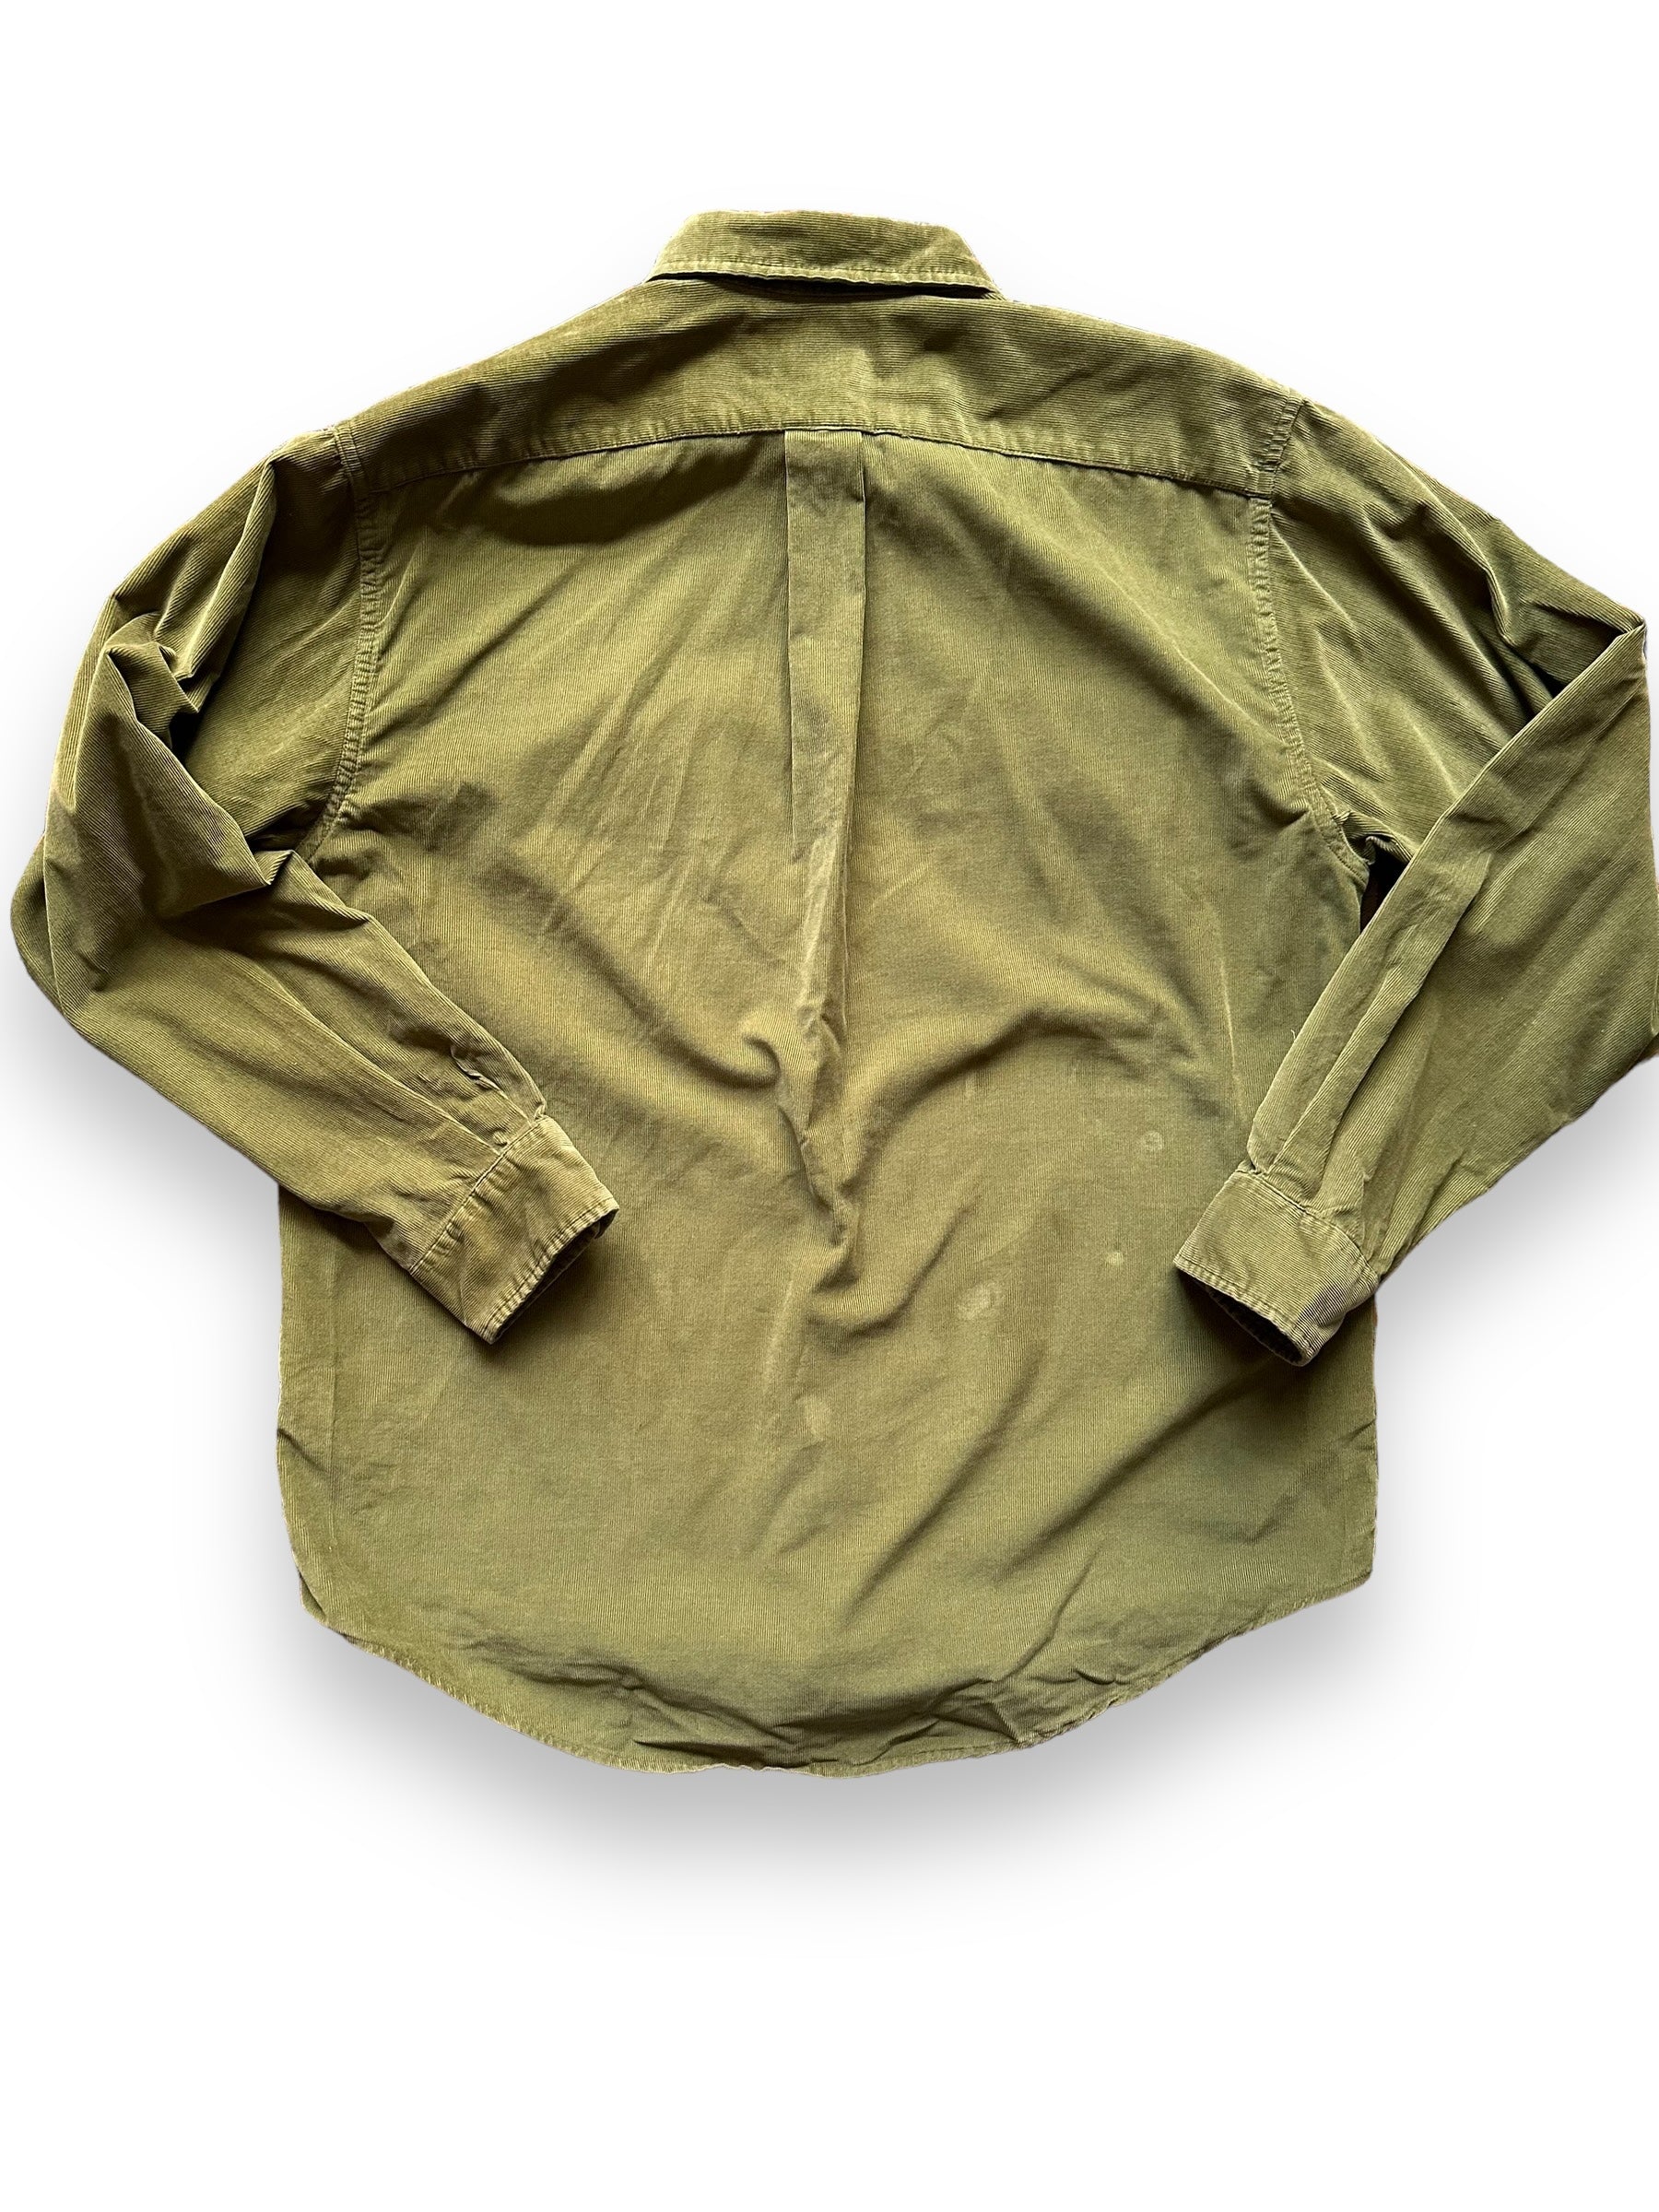 Rear View of Filson Green Corduroy Shirt SZ M |  Barn Owl Vintage Goods Seattle | Filson Bargain Outlet